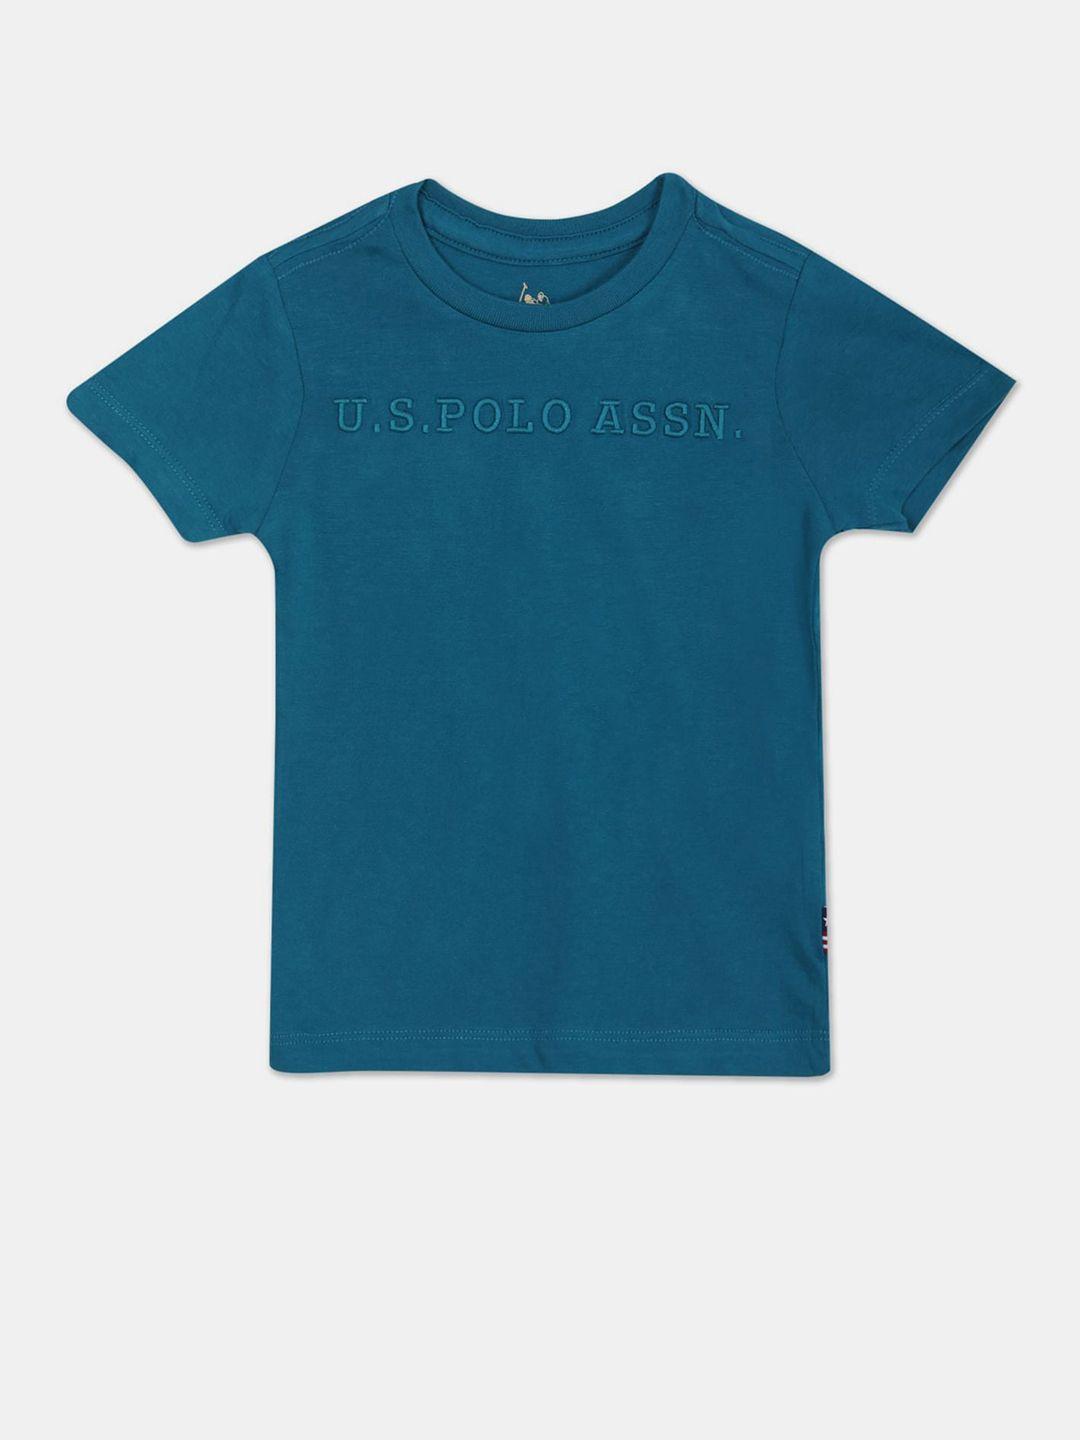 u.s. polo assn. kids boys typography cotton t-shirt